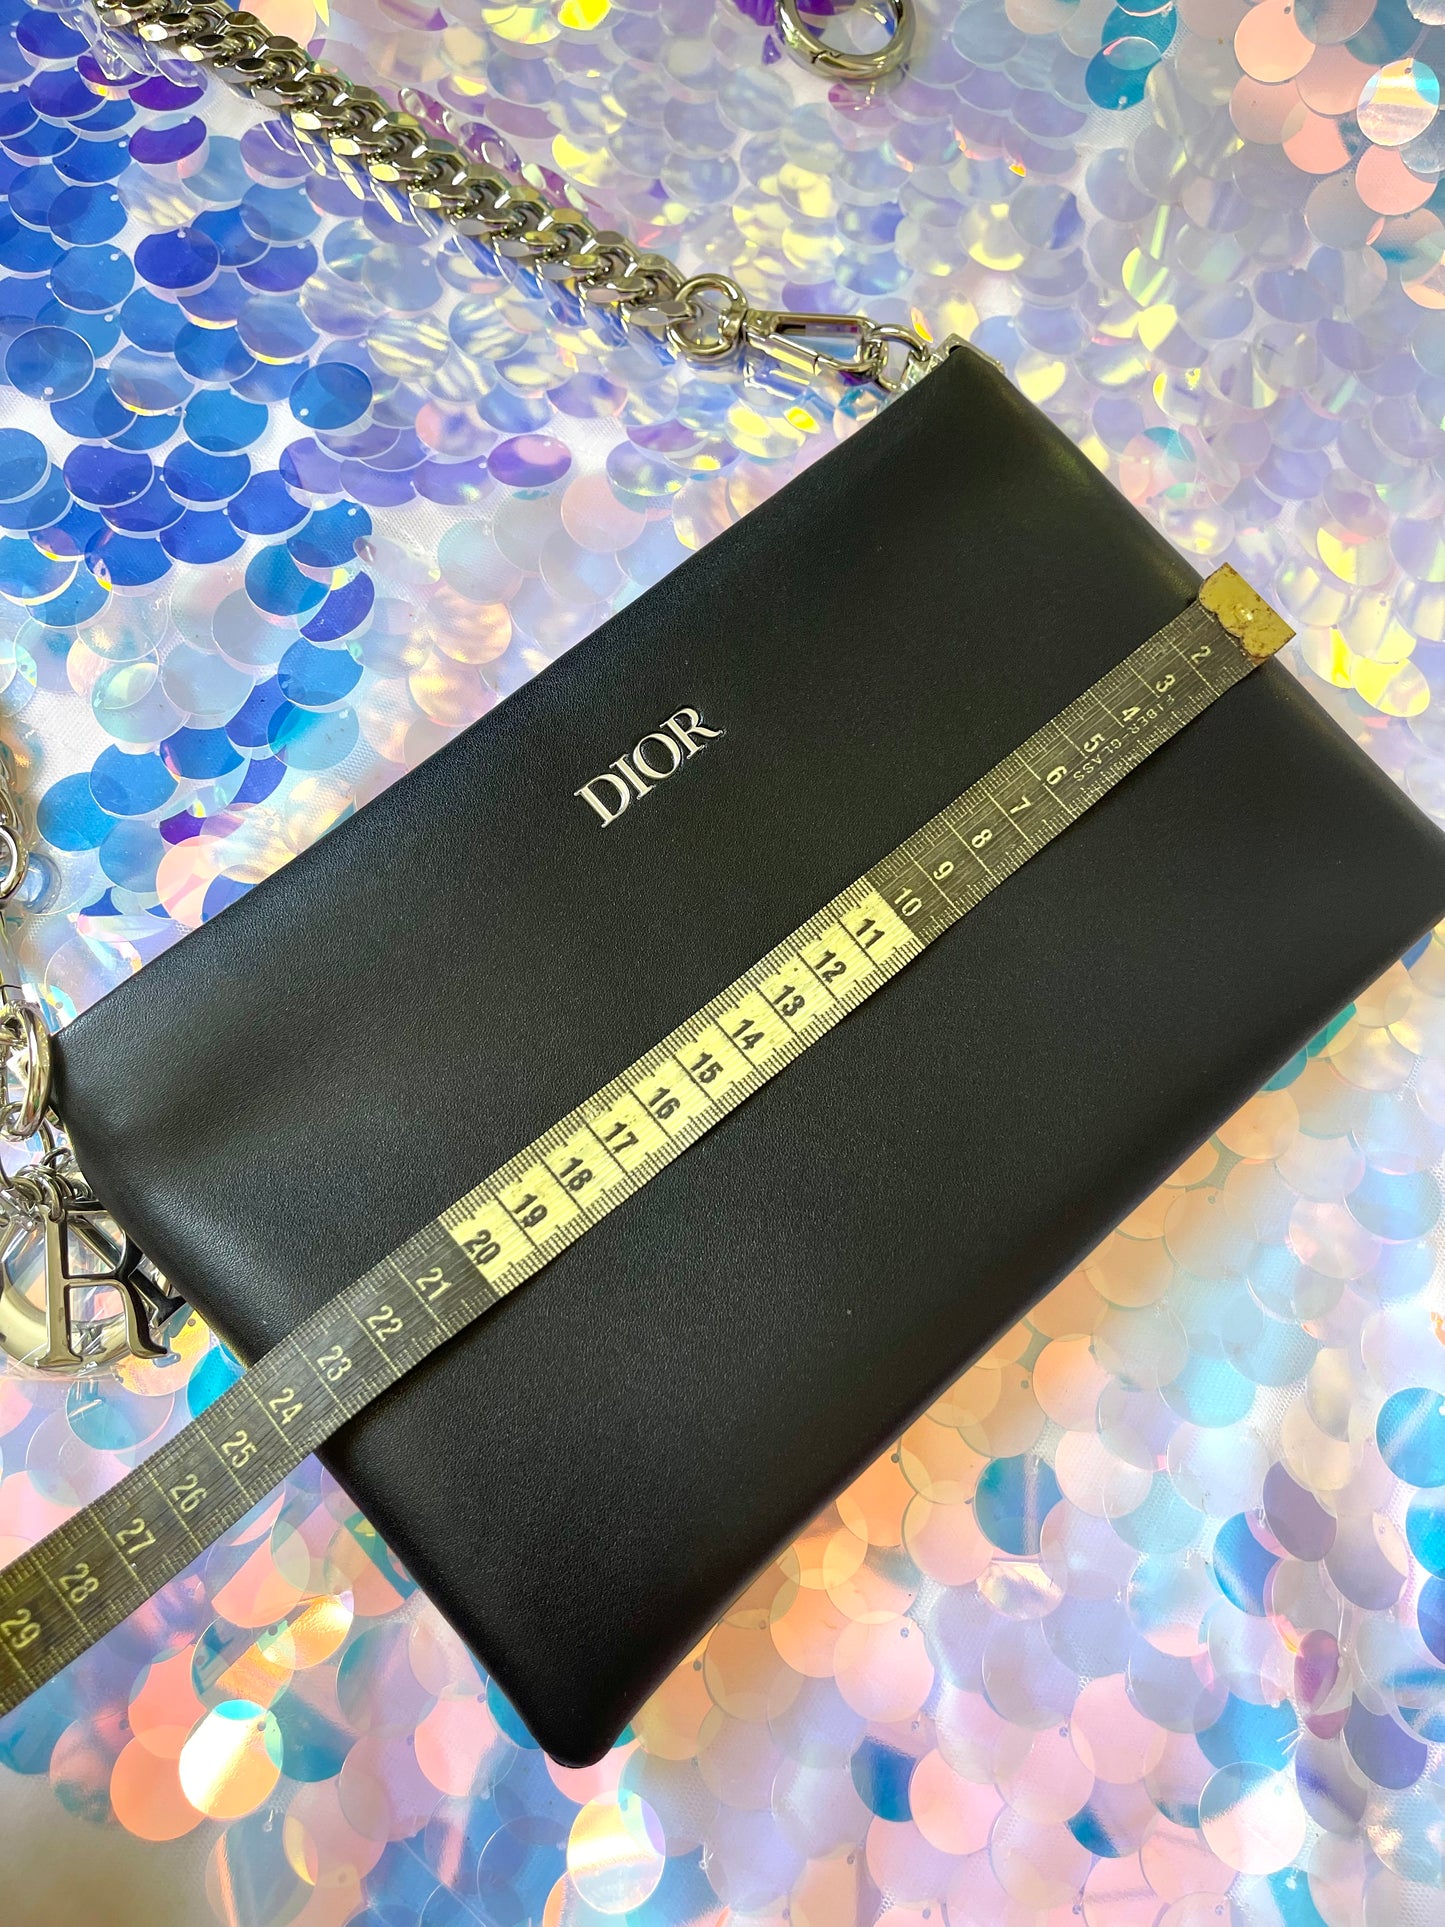 Customized Dior Beauty Shoulder Bag